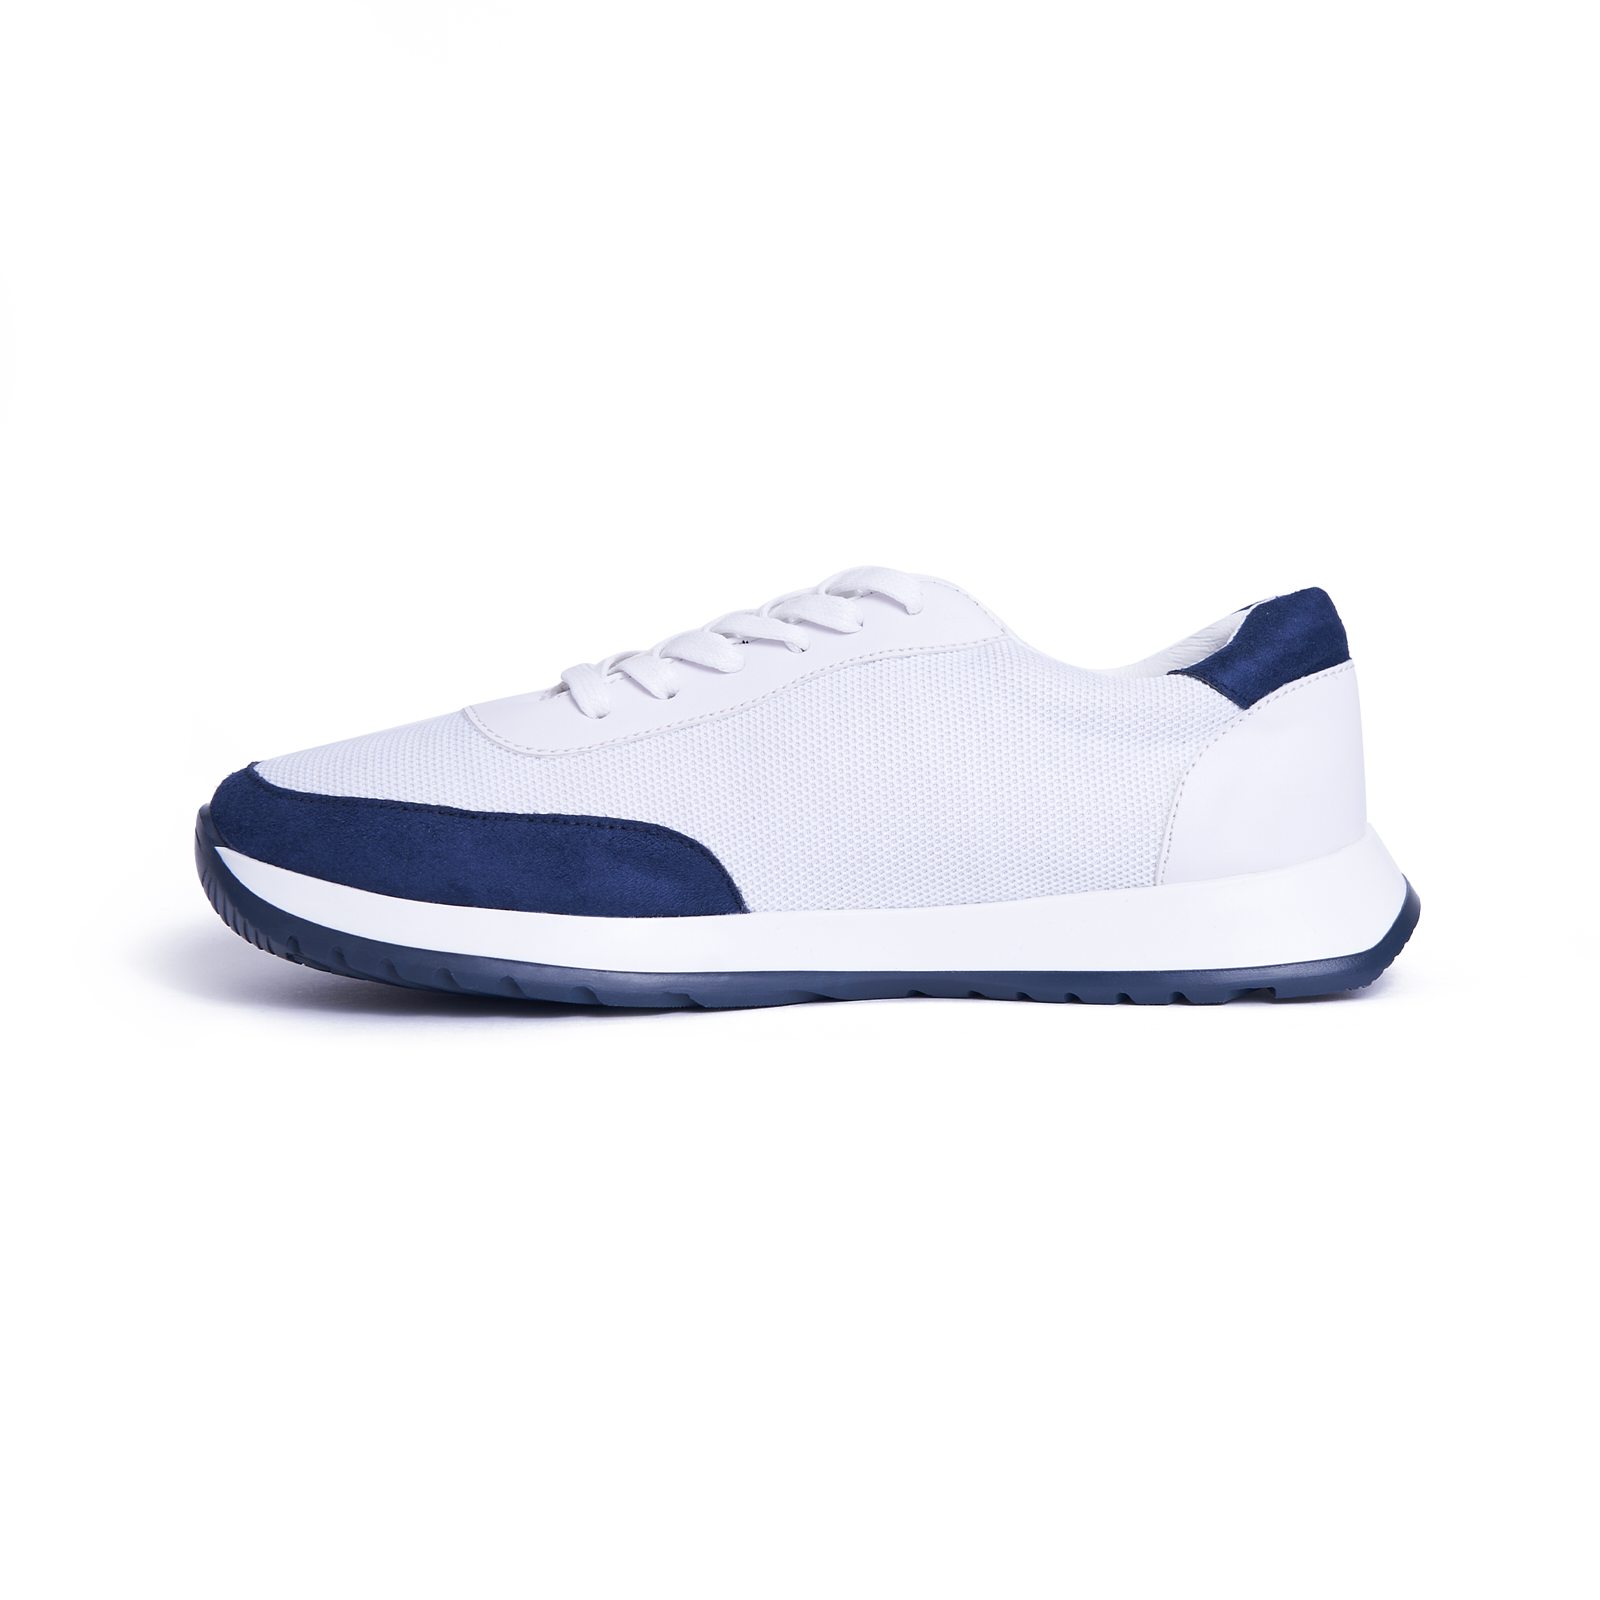 Men's Fashion Sneaker - White Color Model K1